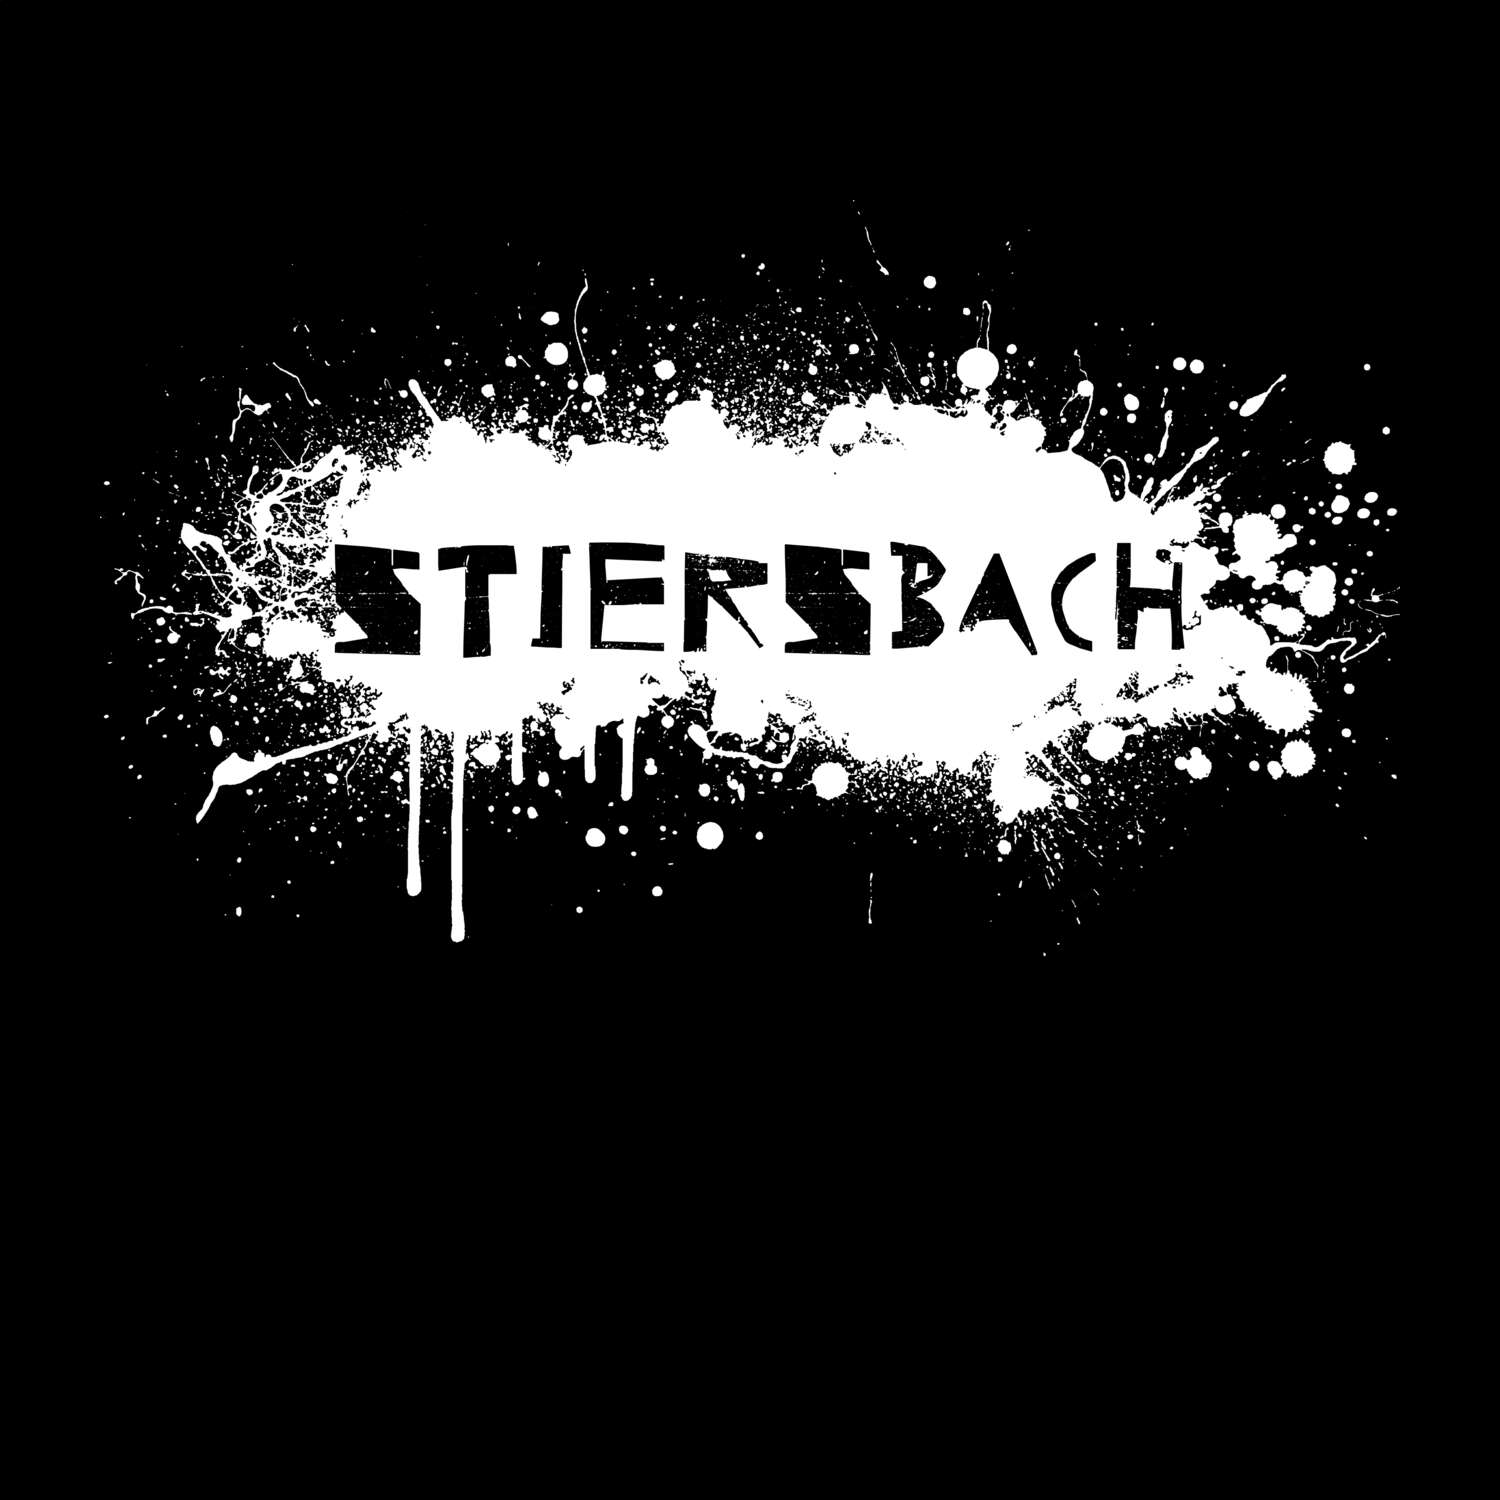 Stiersbach T-Shirt »Paint Splash Punk«